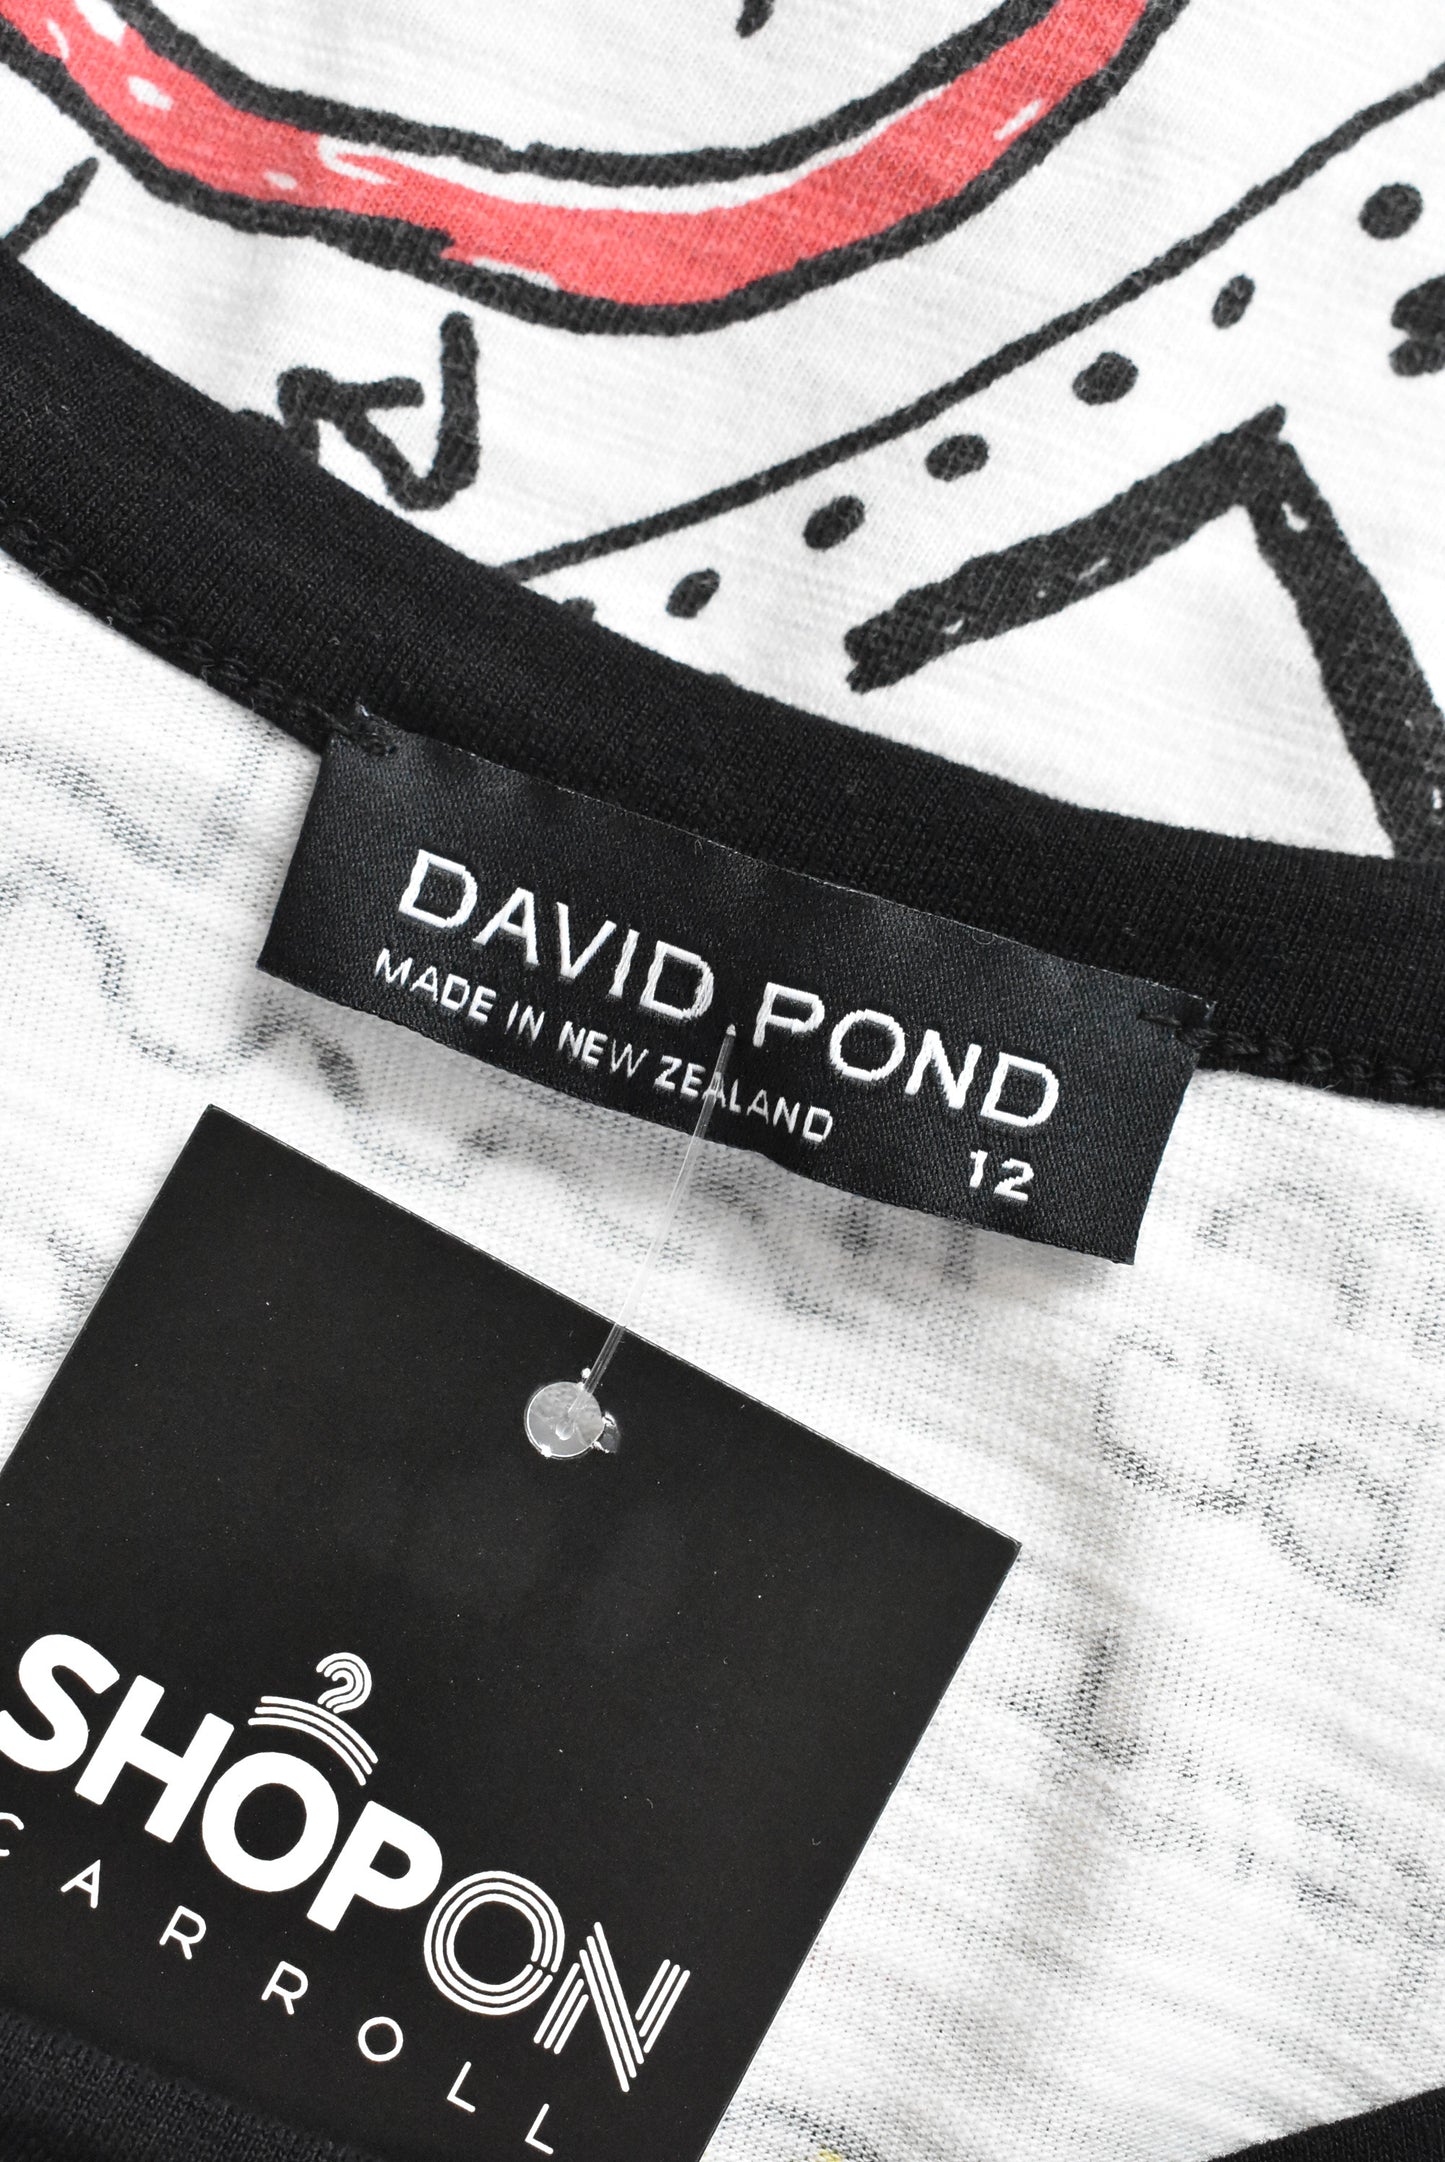 David Pond t-shirt dress, 12